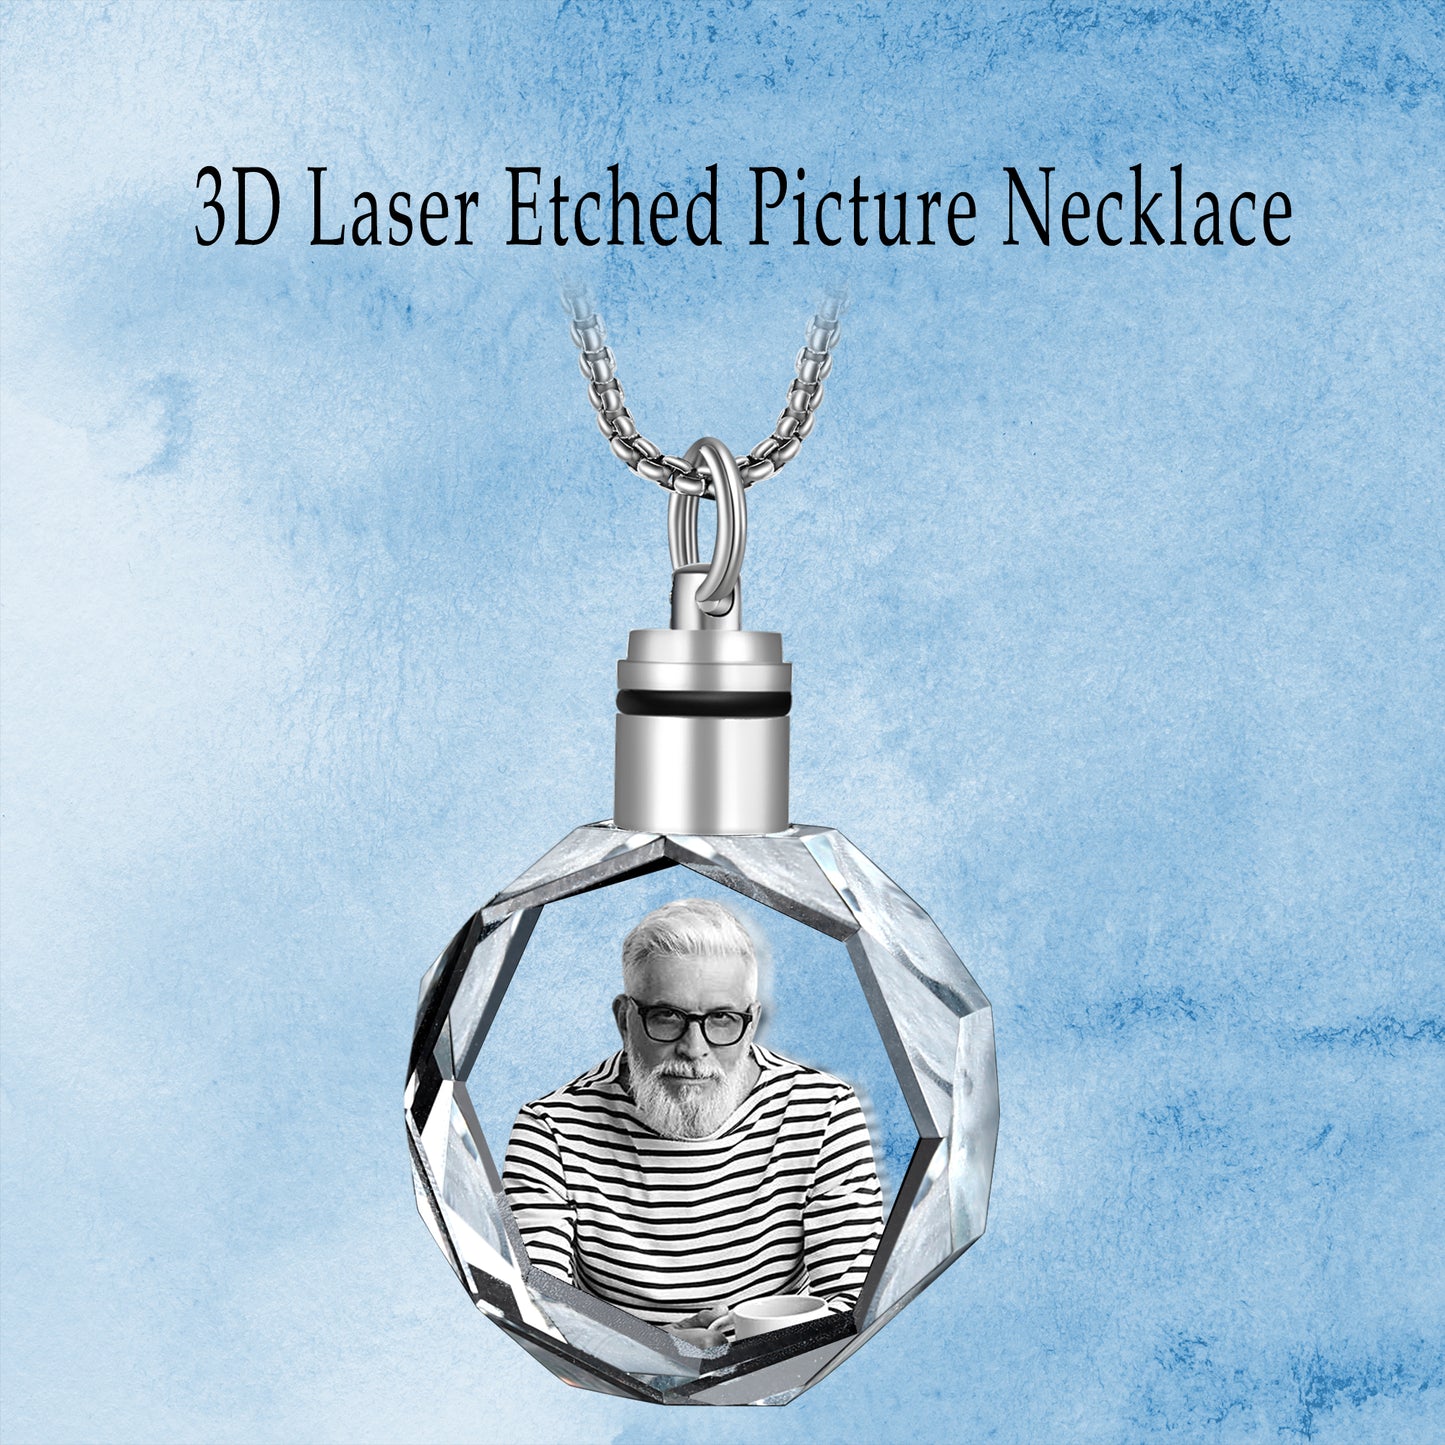 3D Laser Etched Picture Necklace